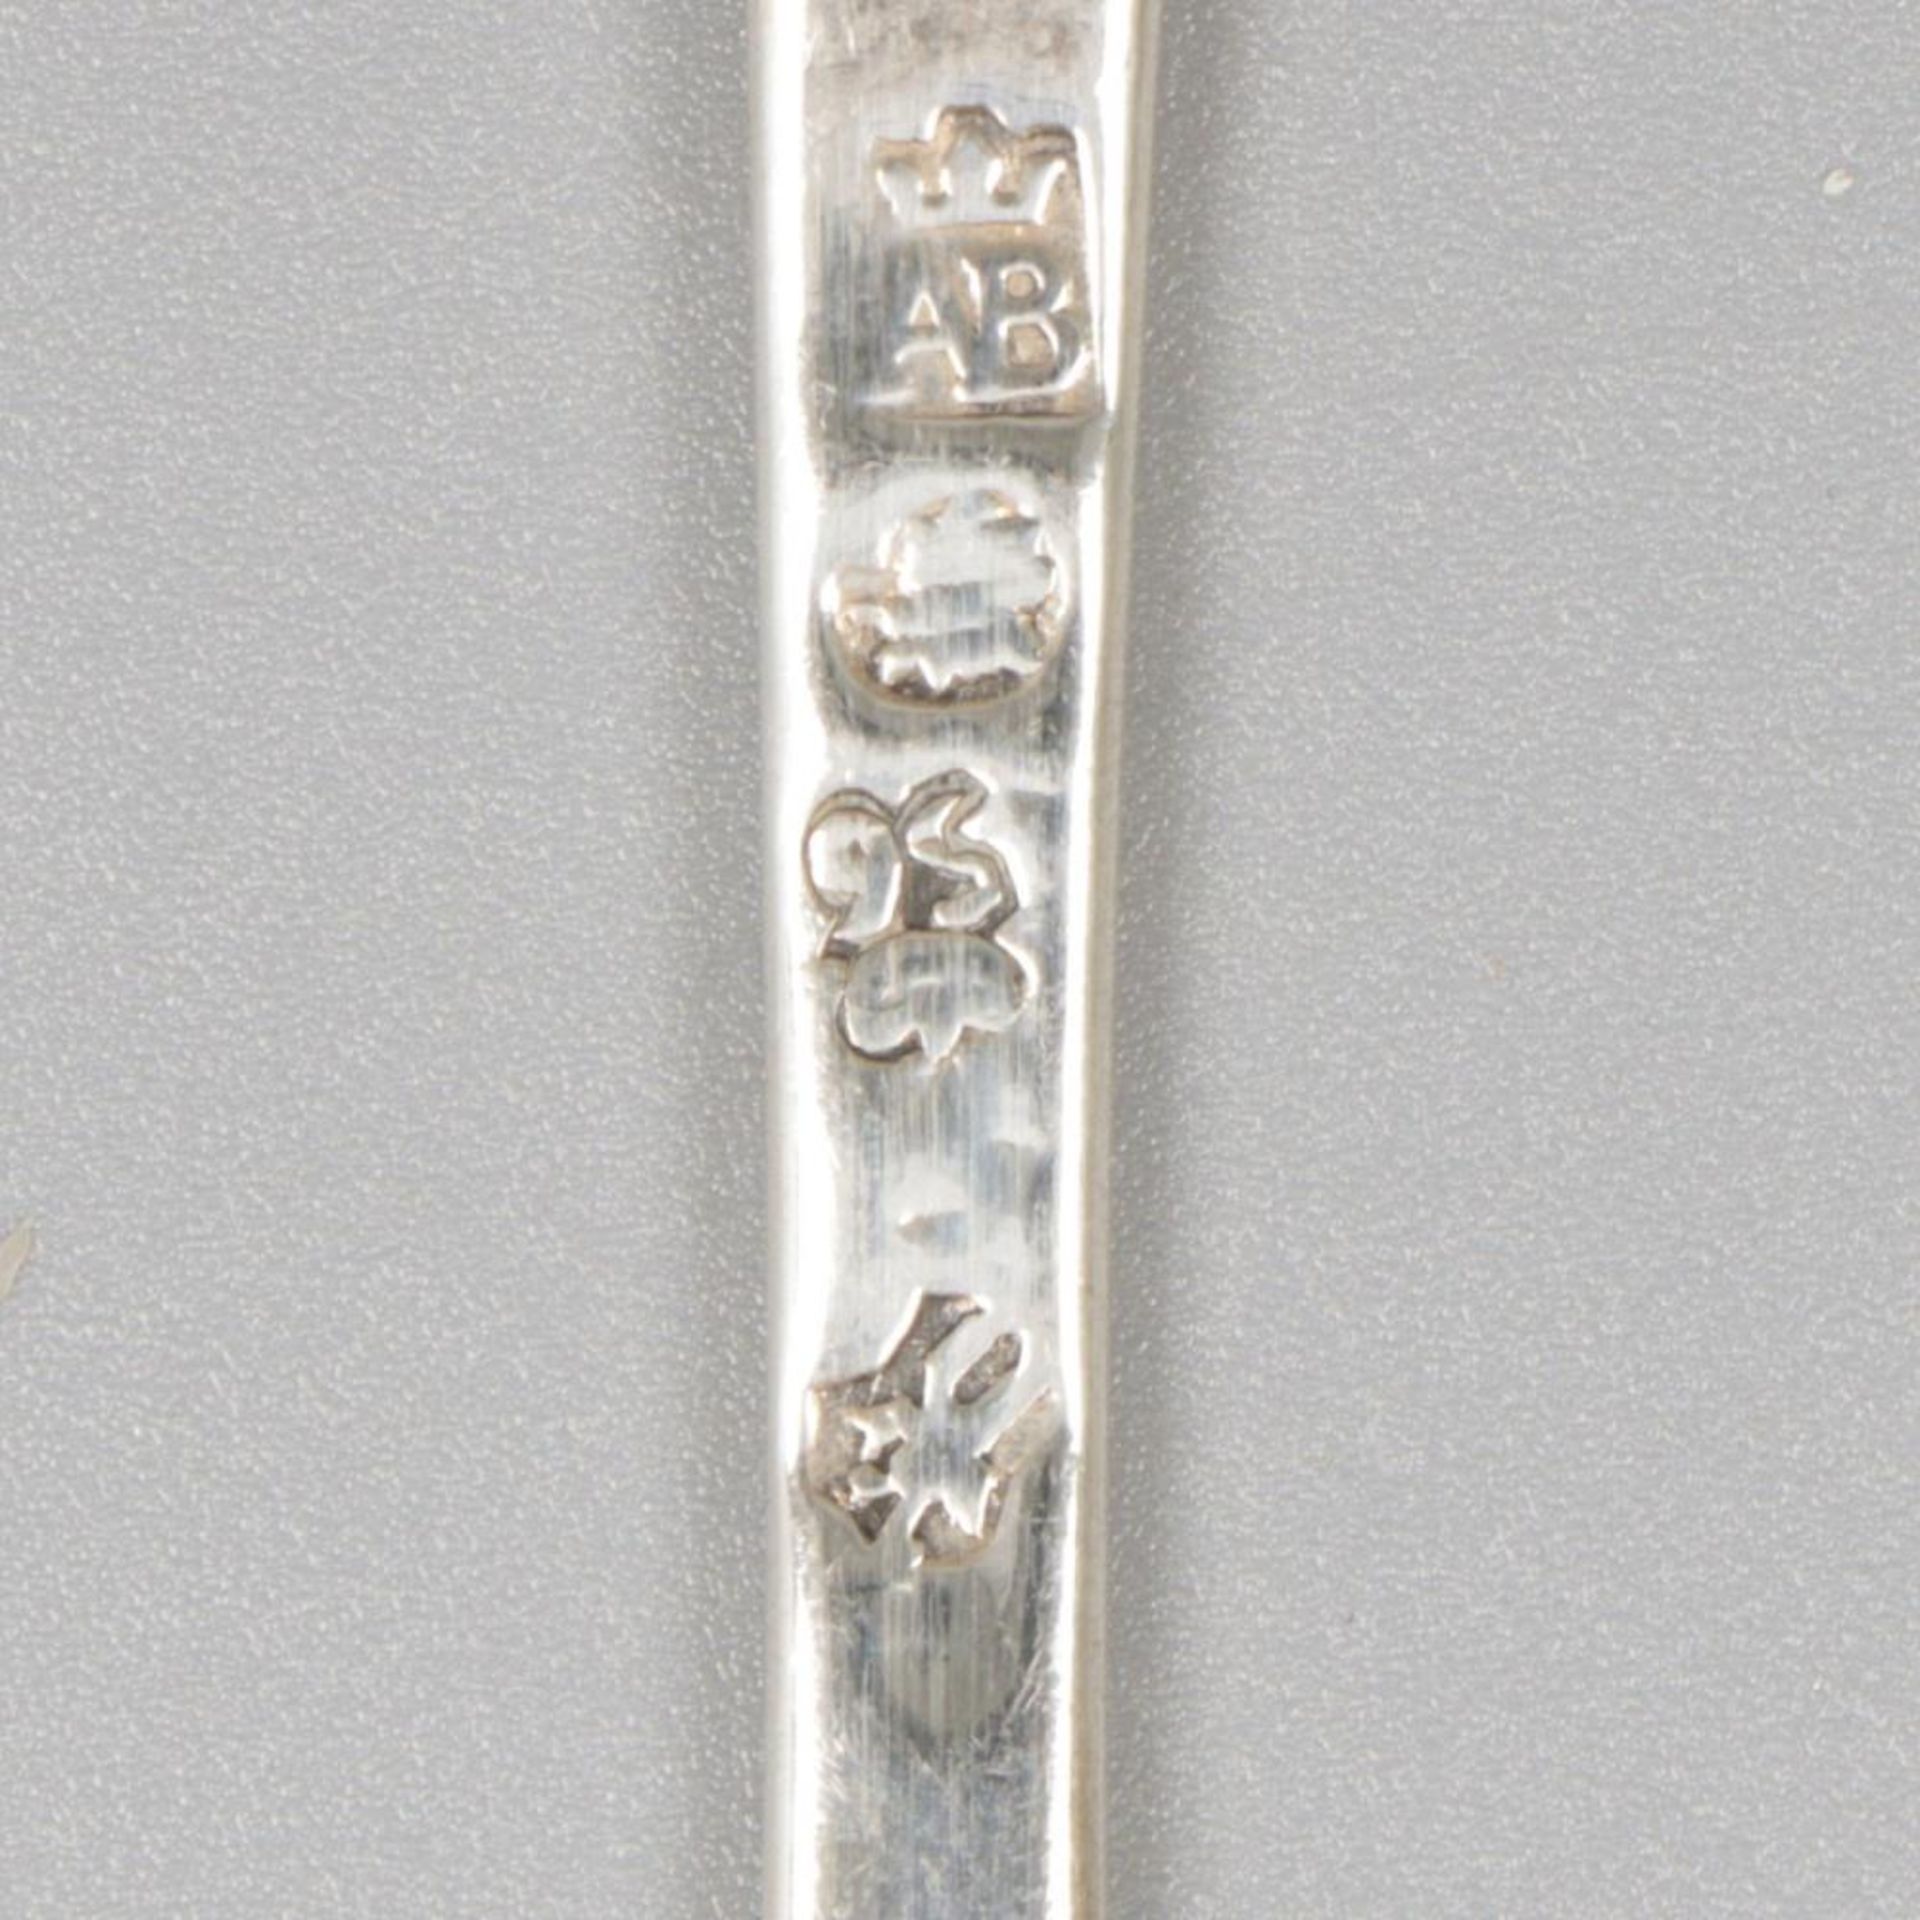 Set of 6 spoons (Bruges, Belgium, Adrianus Buschop 1756) silver. - Image 7 of 8